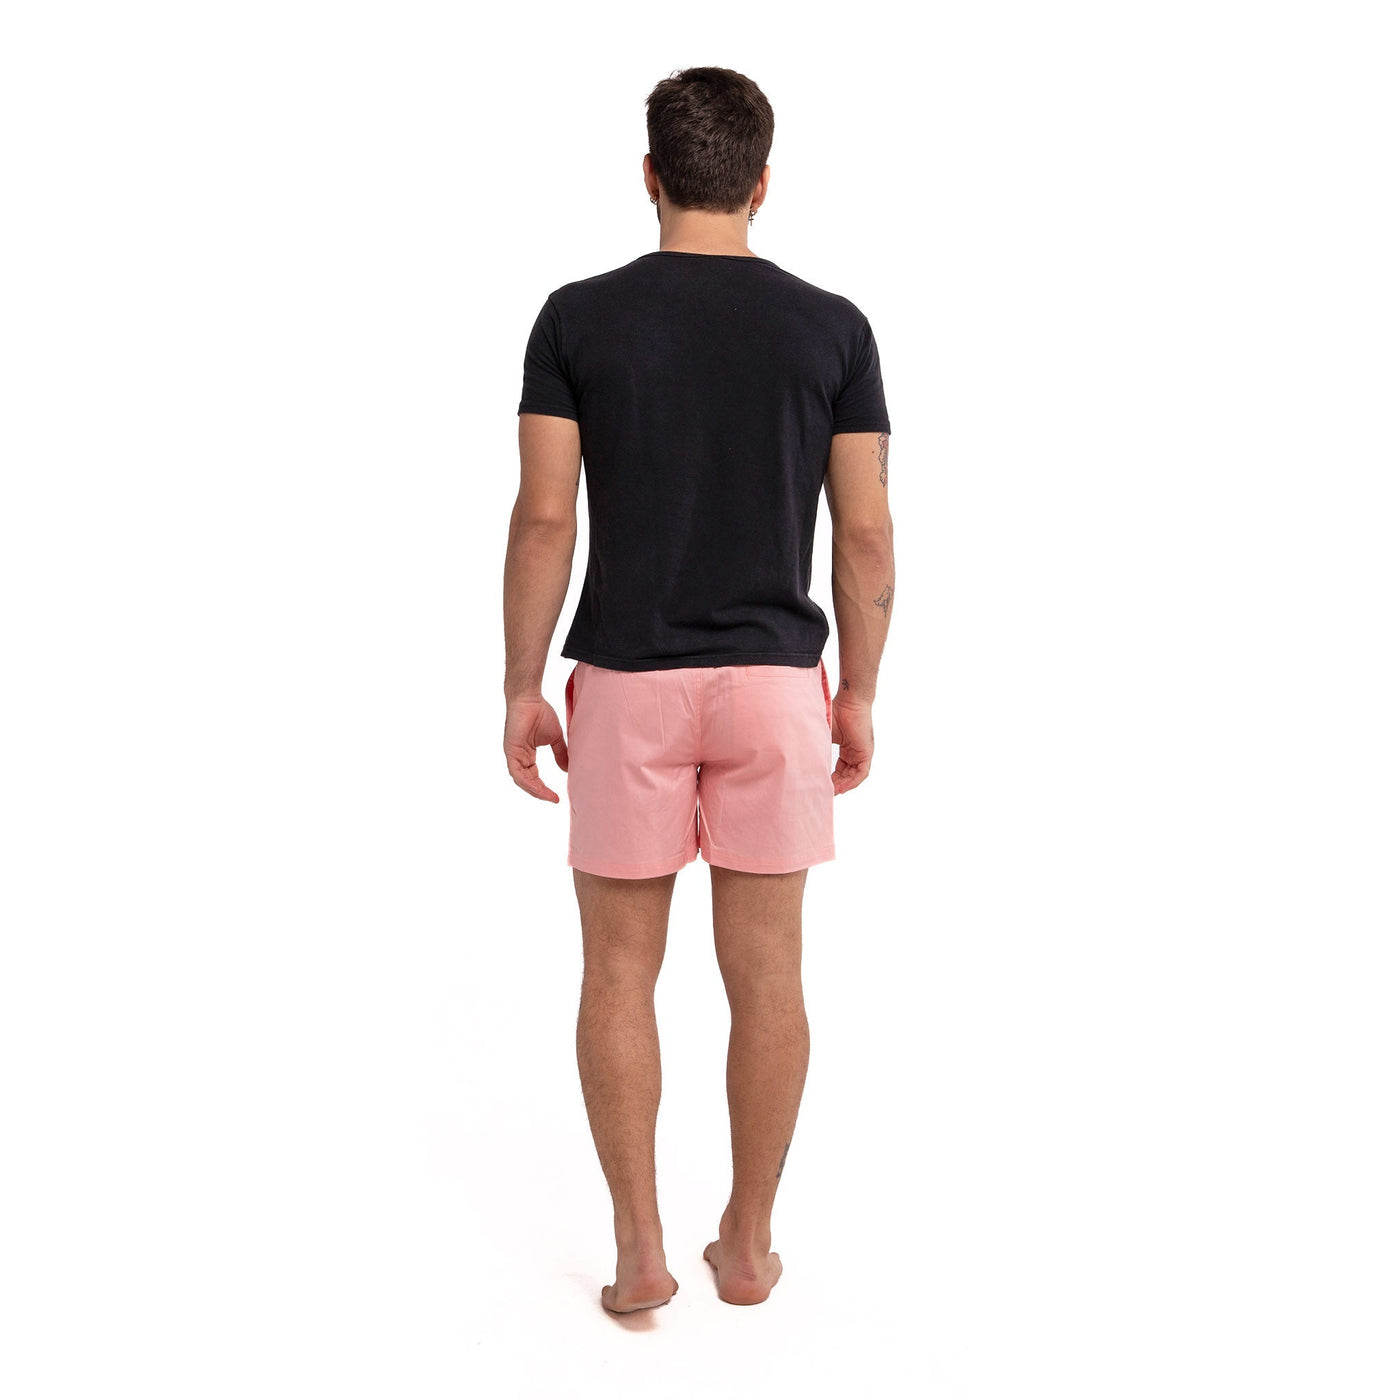 Cotton Shorts - Pink by Bermies Swimwear